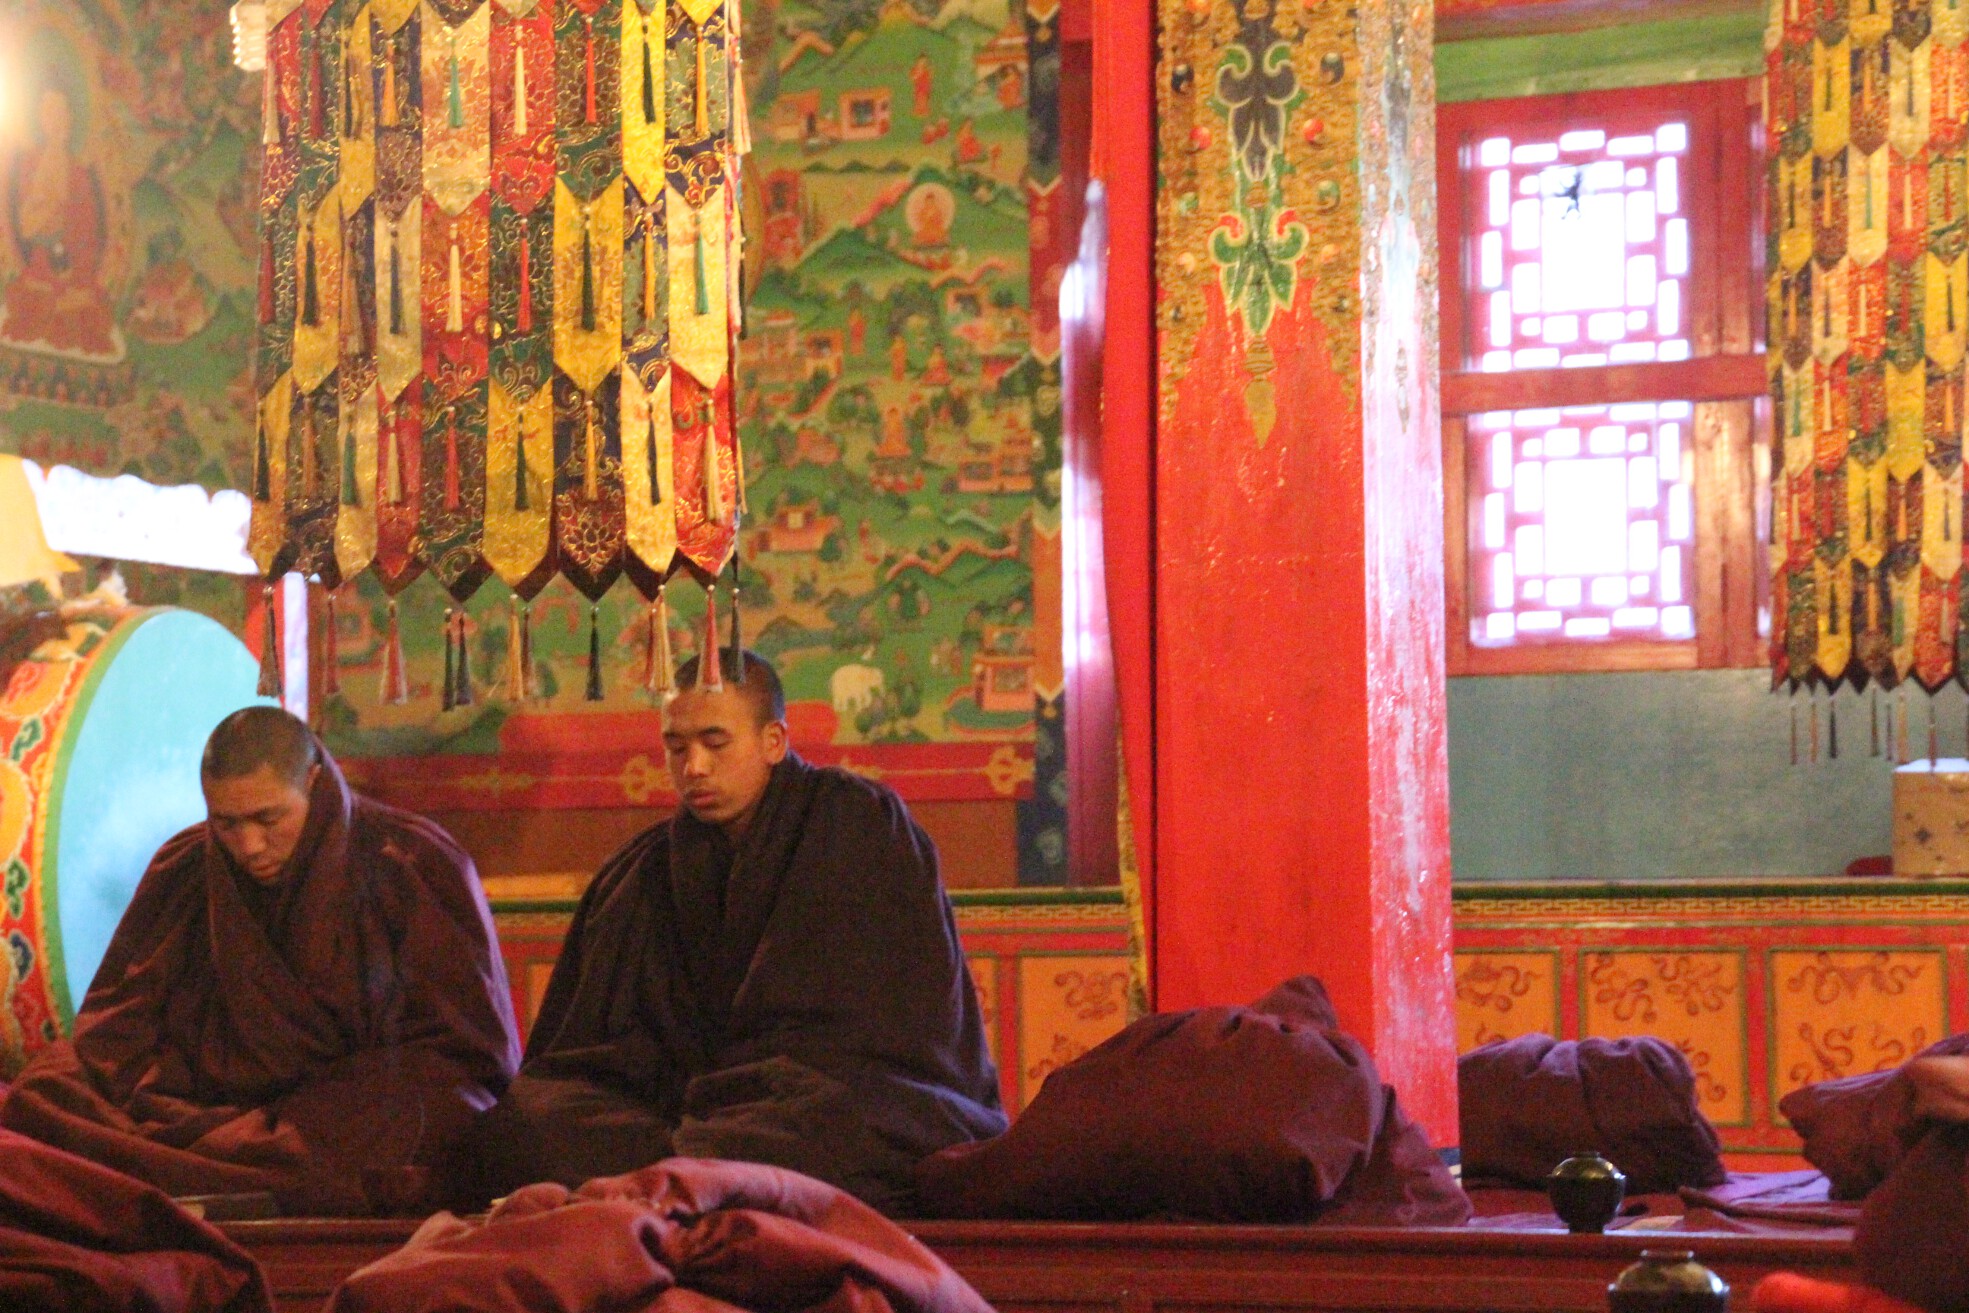 Monks meditate in the monastery in Tengboche, Nepal.